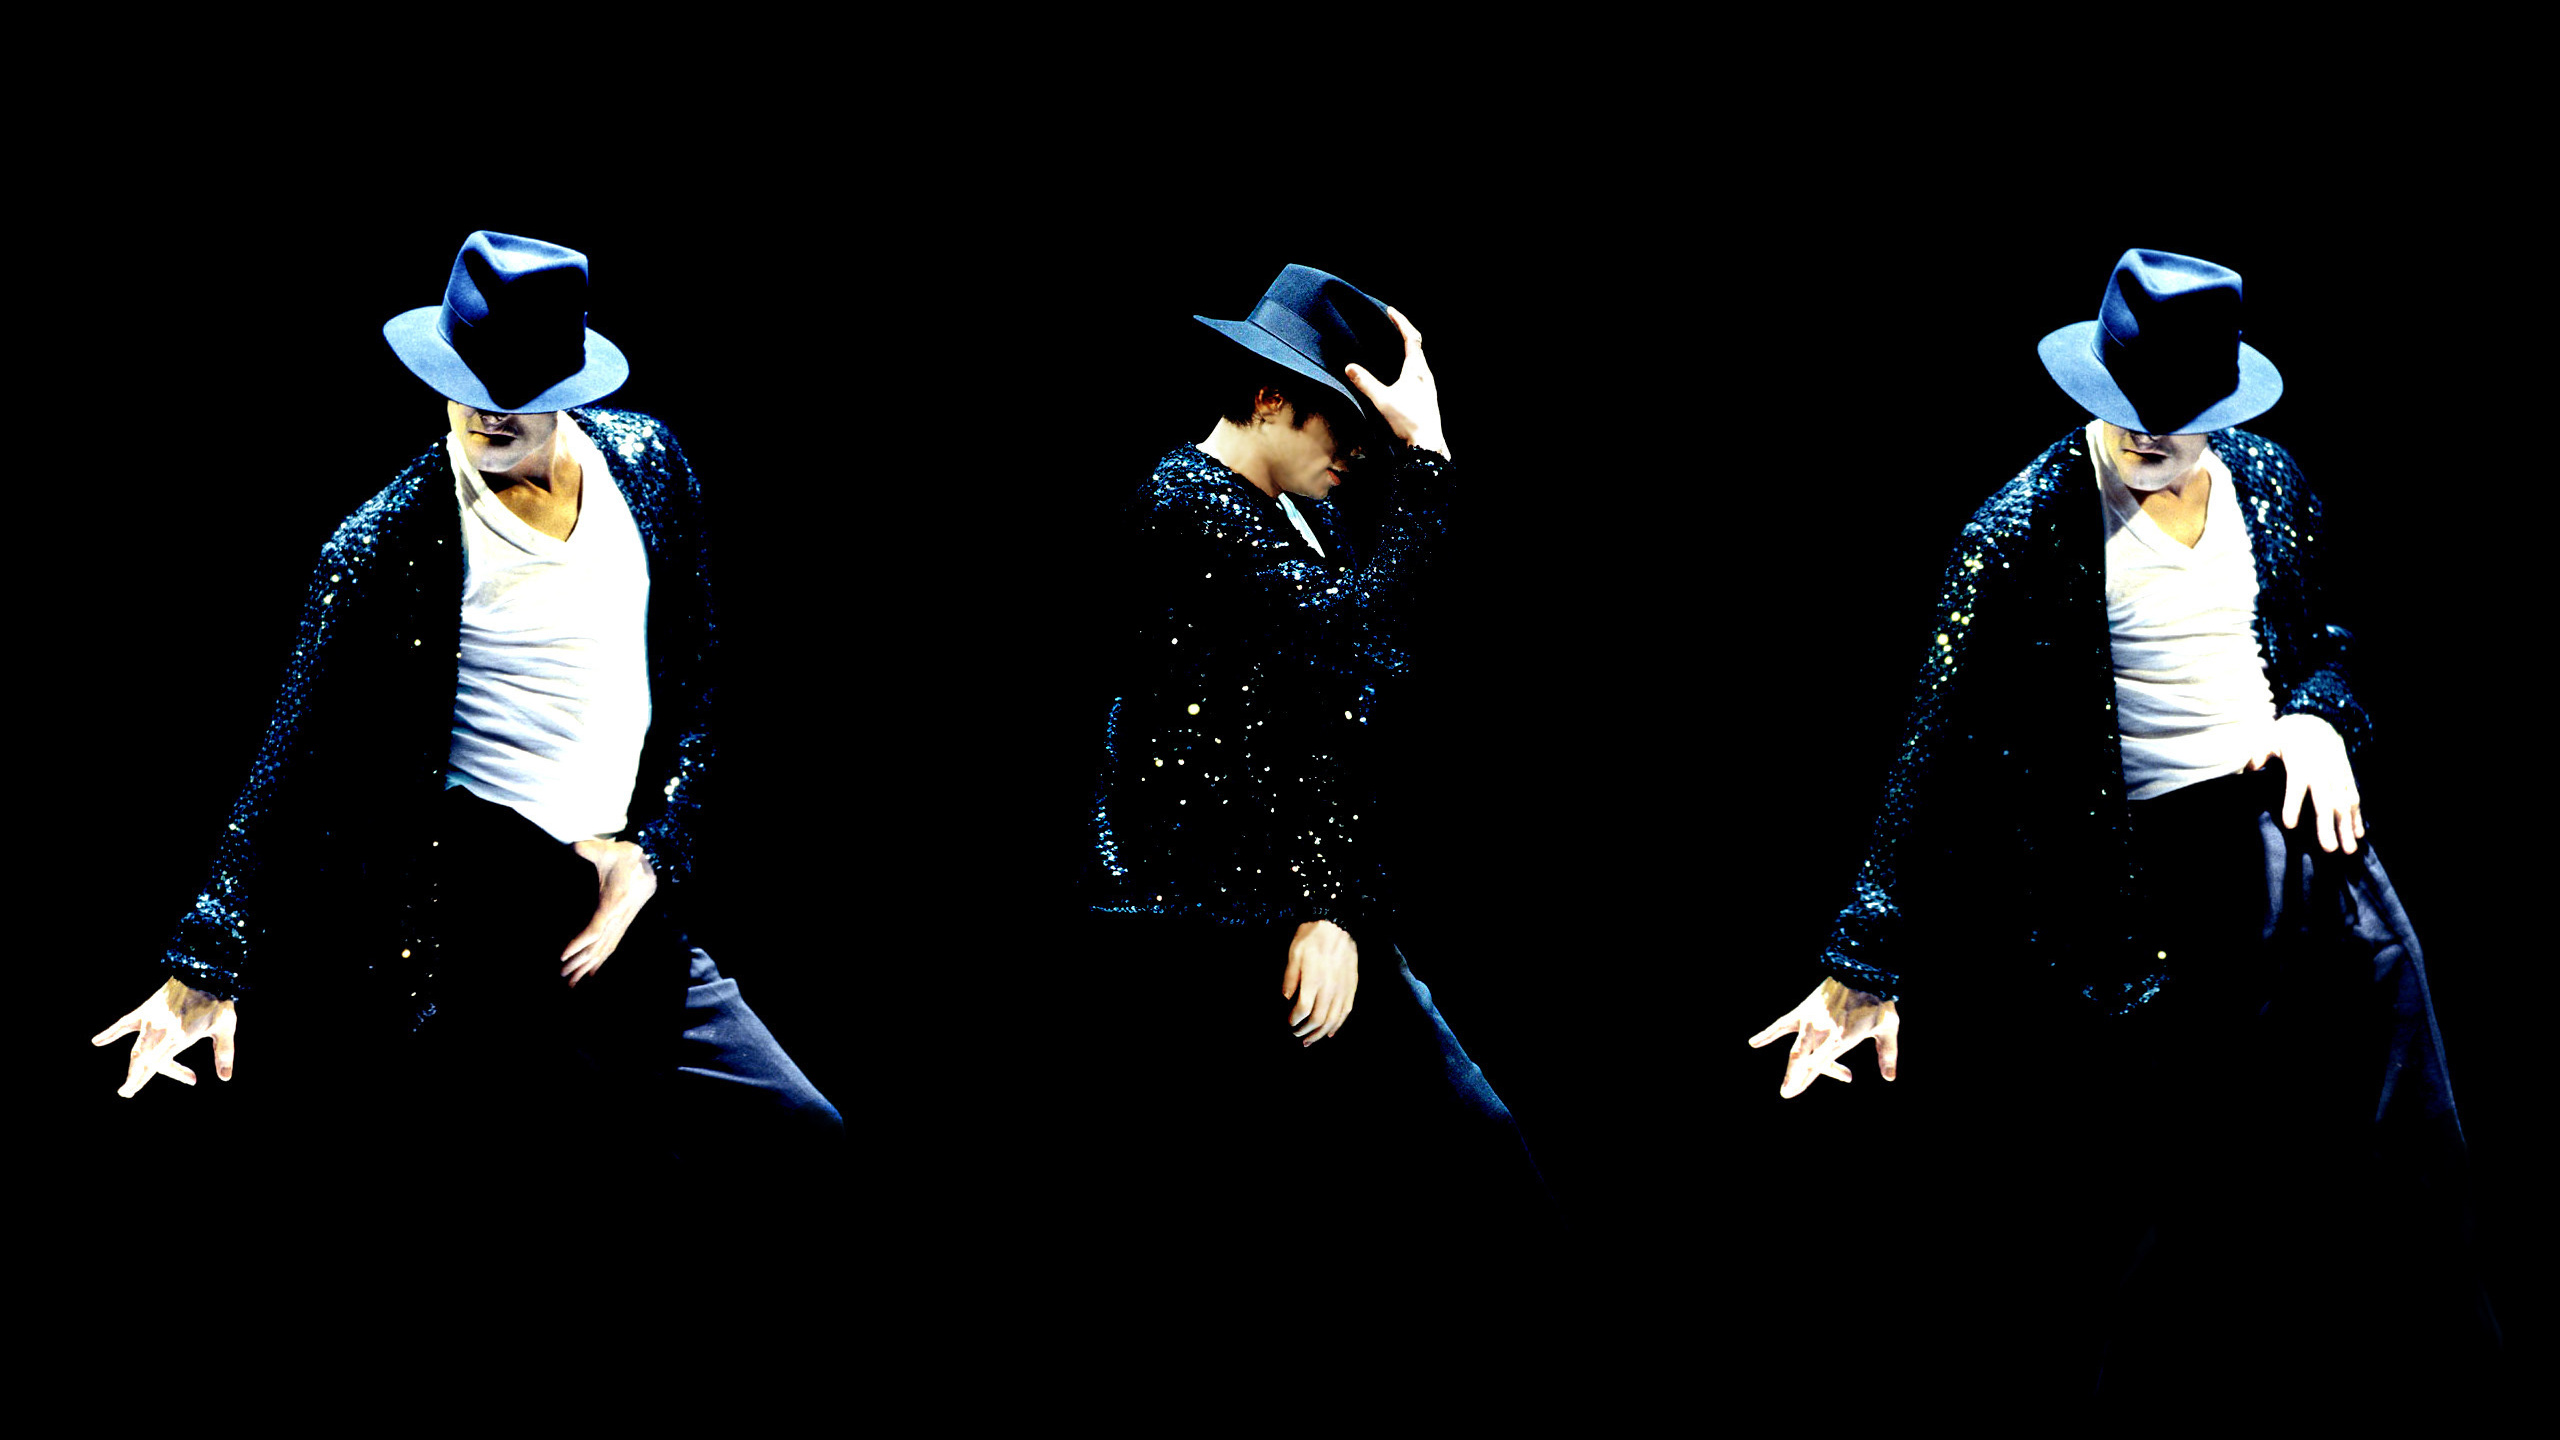 Michael Jackson Dance Wallpaper HD